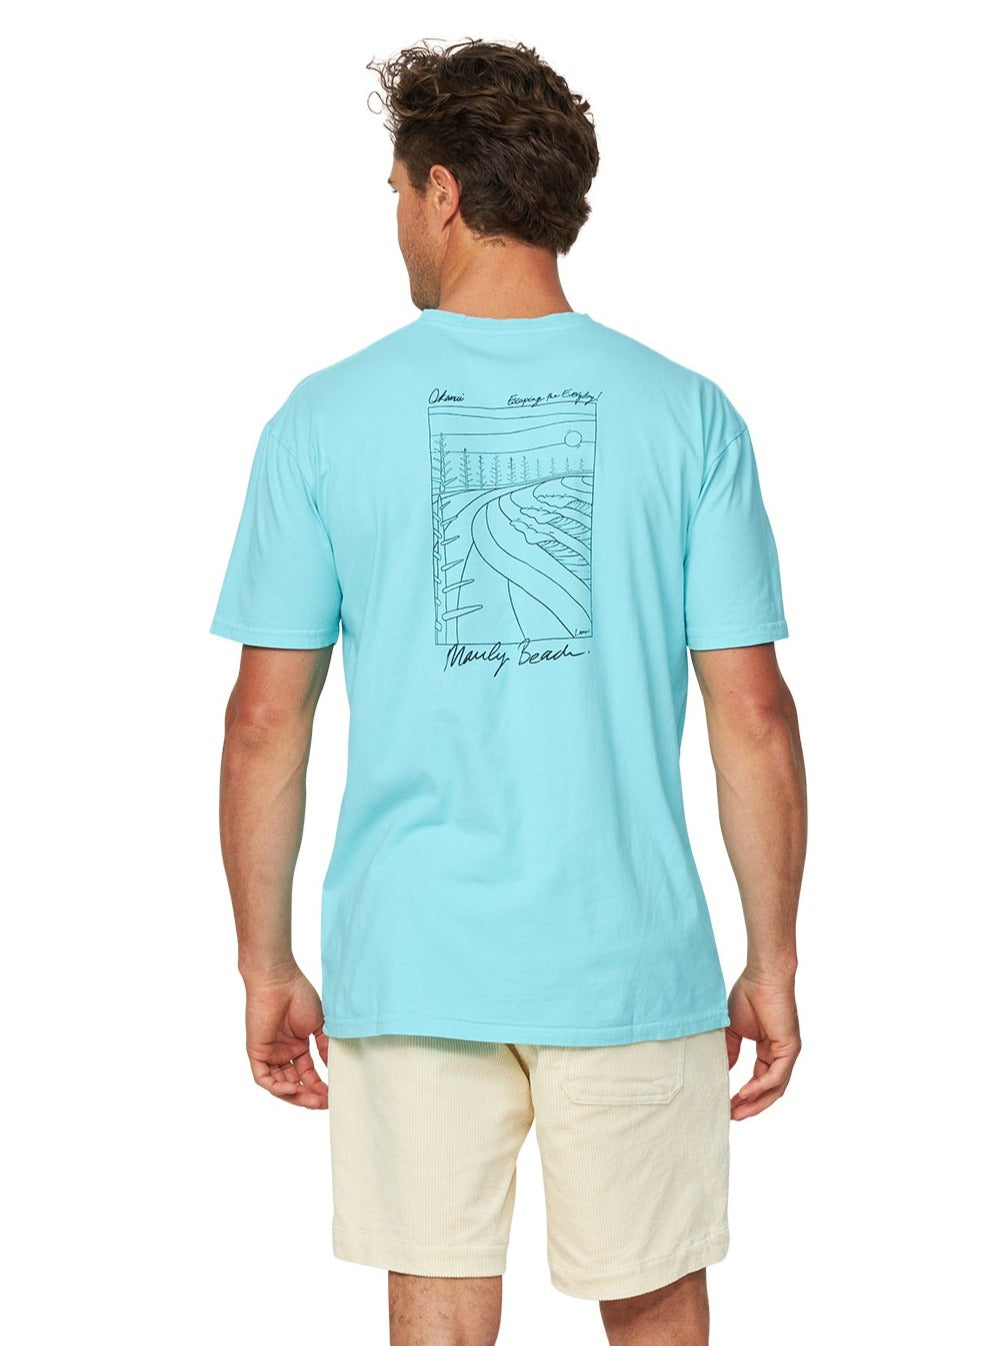 Mens - Okanui x Larmor - T-Shirt - Destination Manly - Washed Aqua